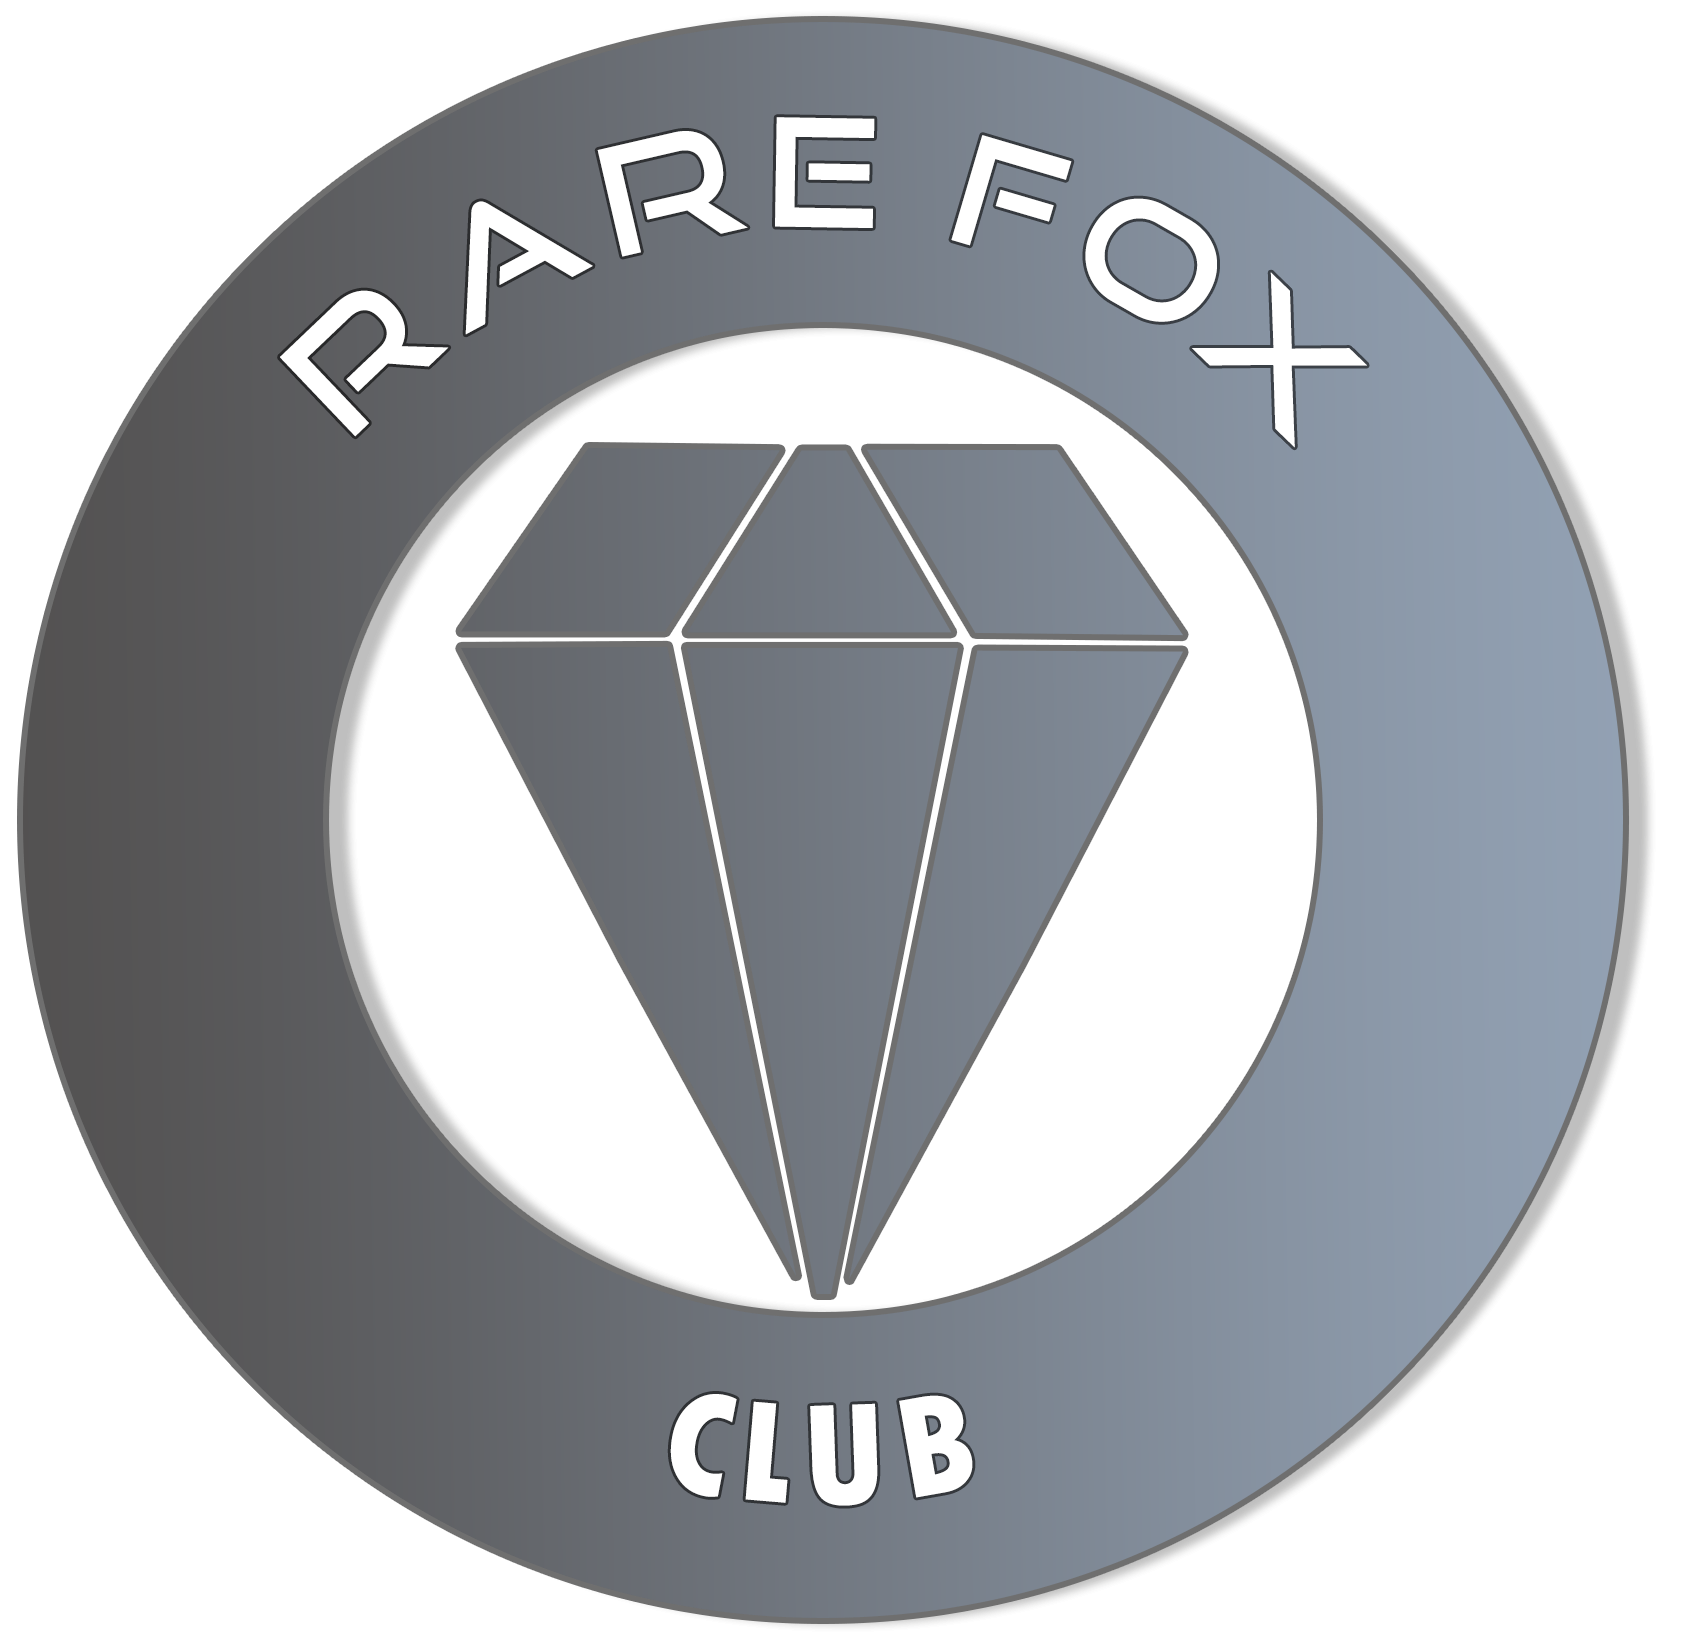 Rare Fox Club